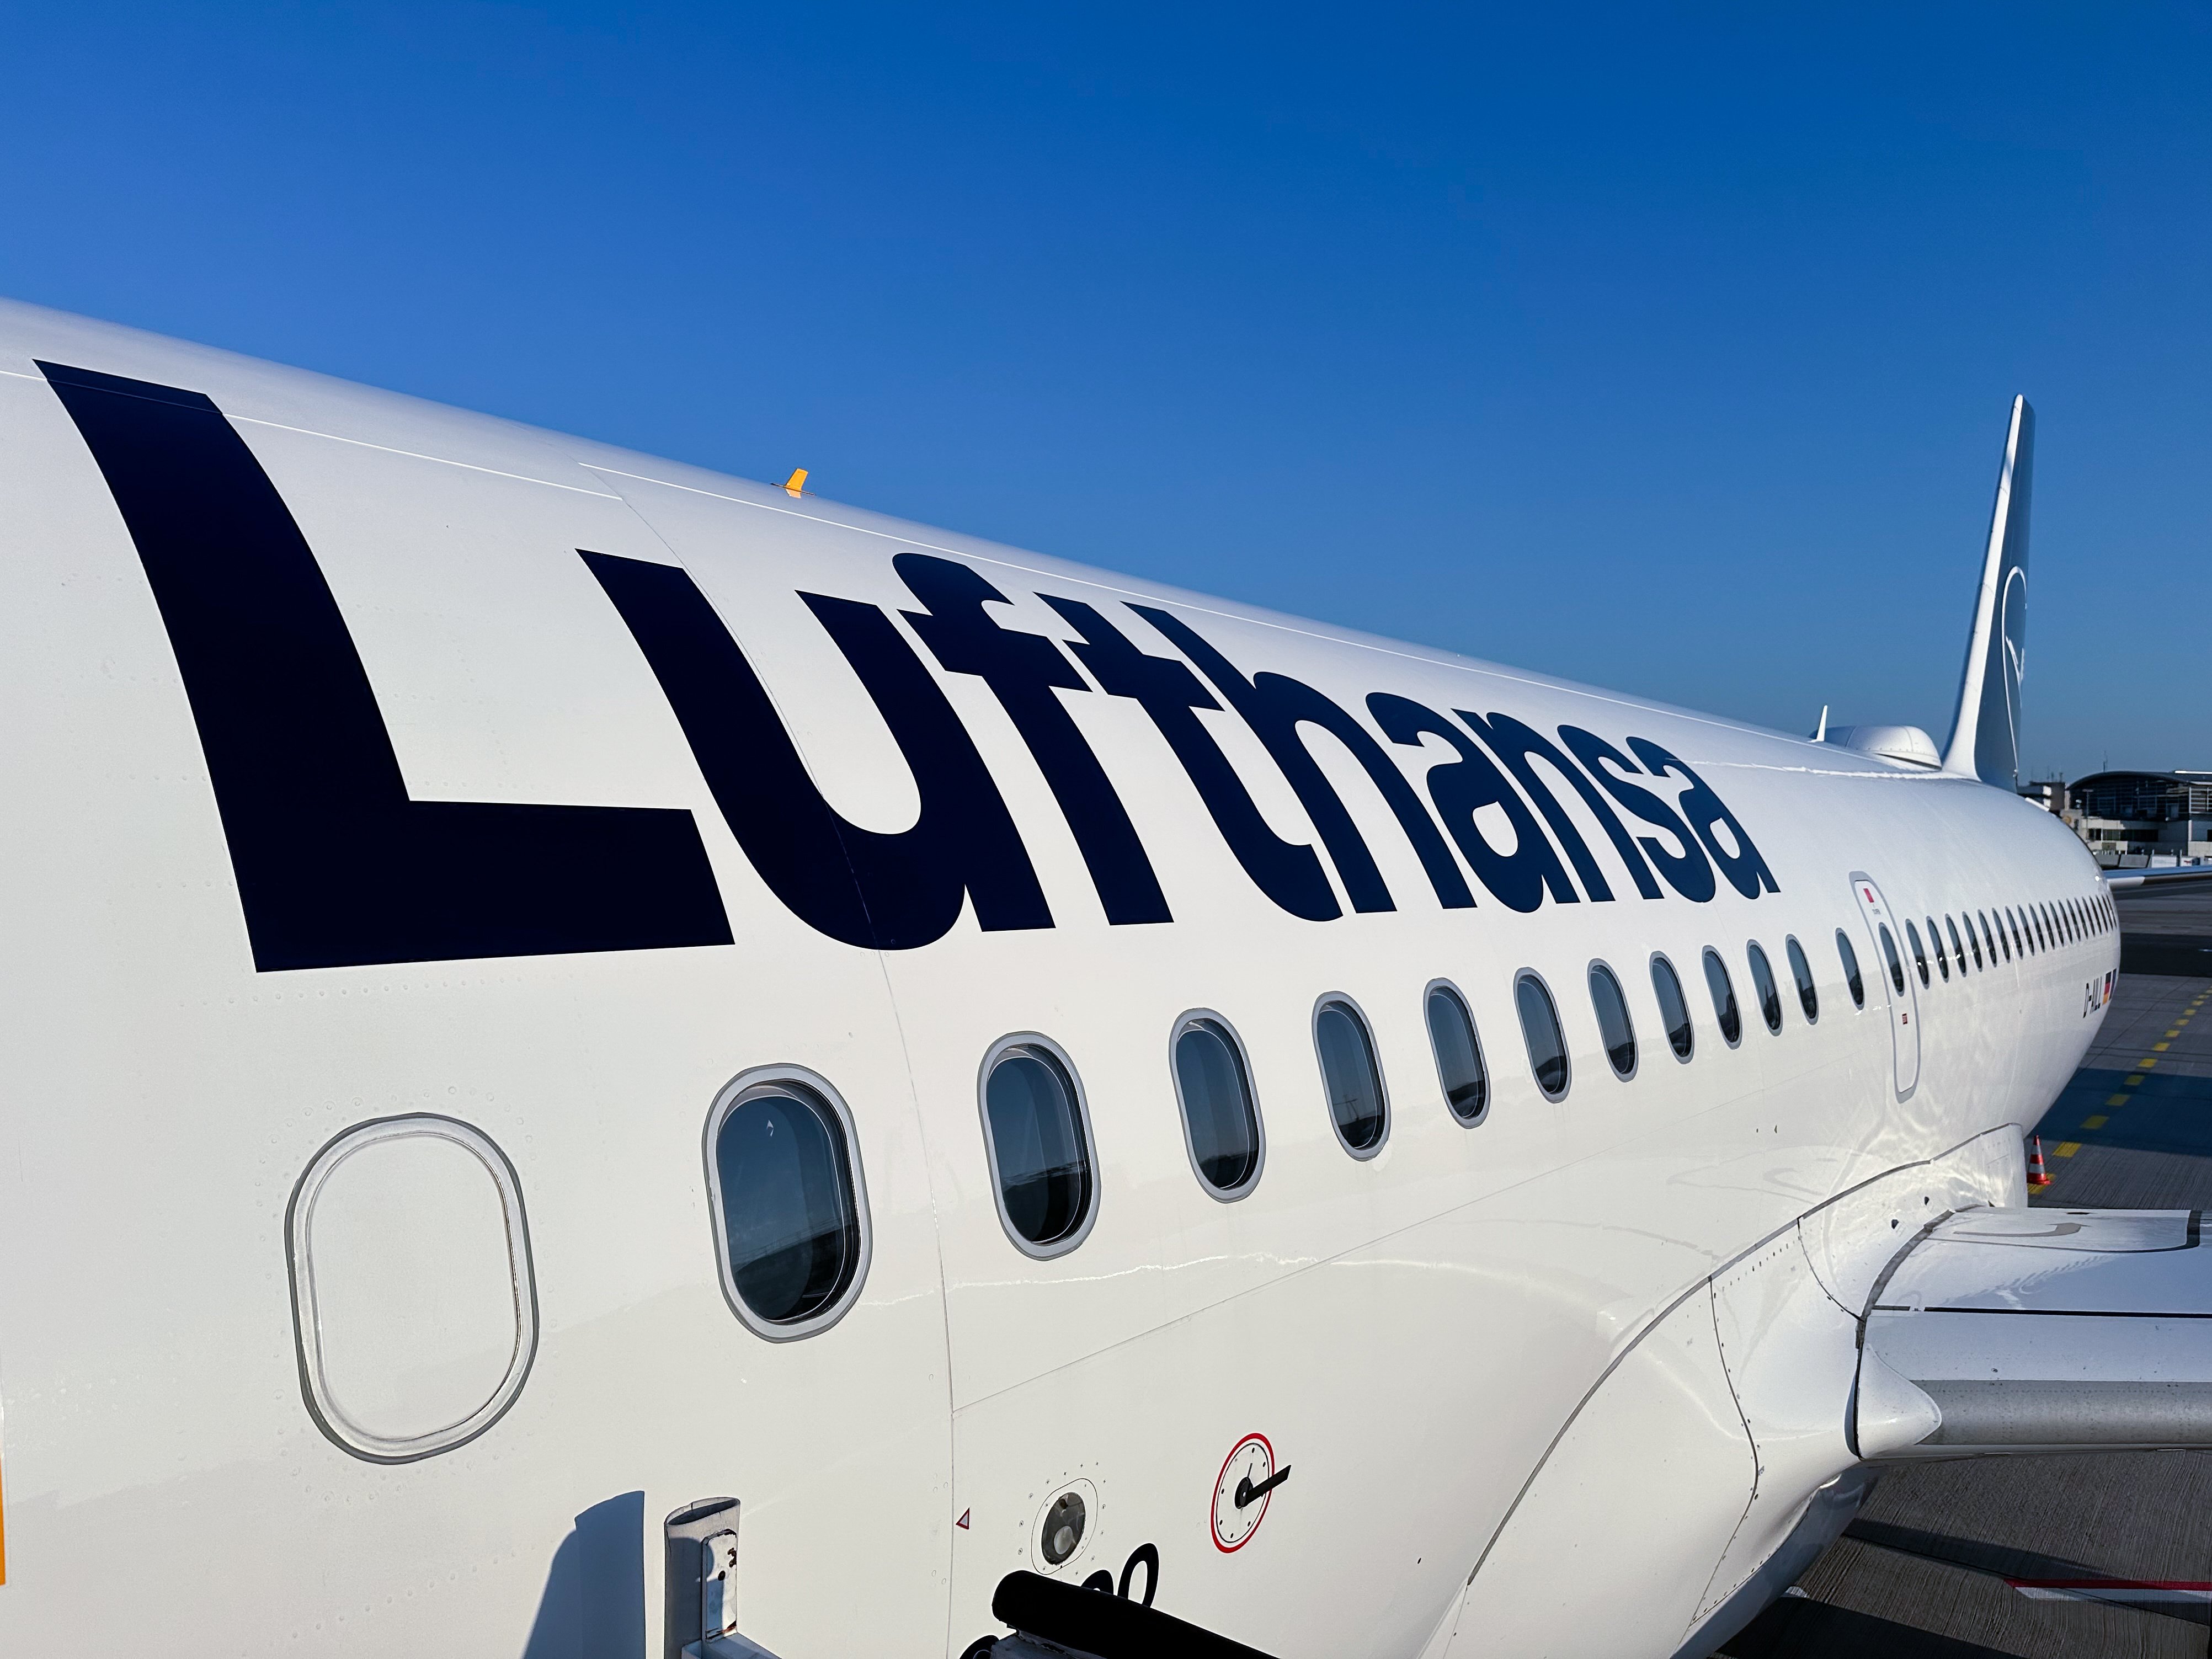 Lufthansa Cabin Crew Strike in Germany, March 12-13